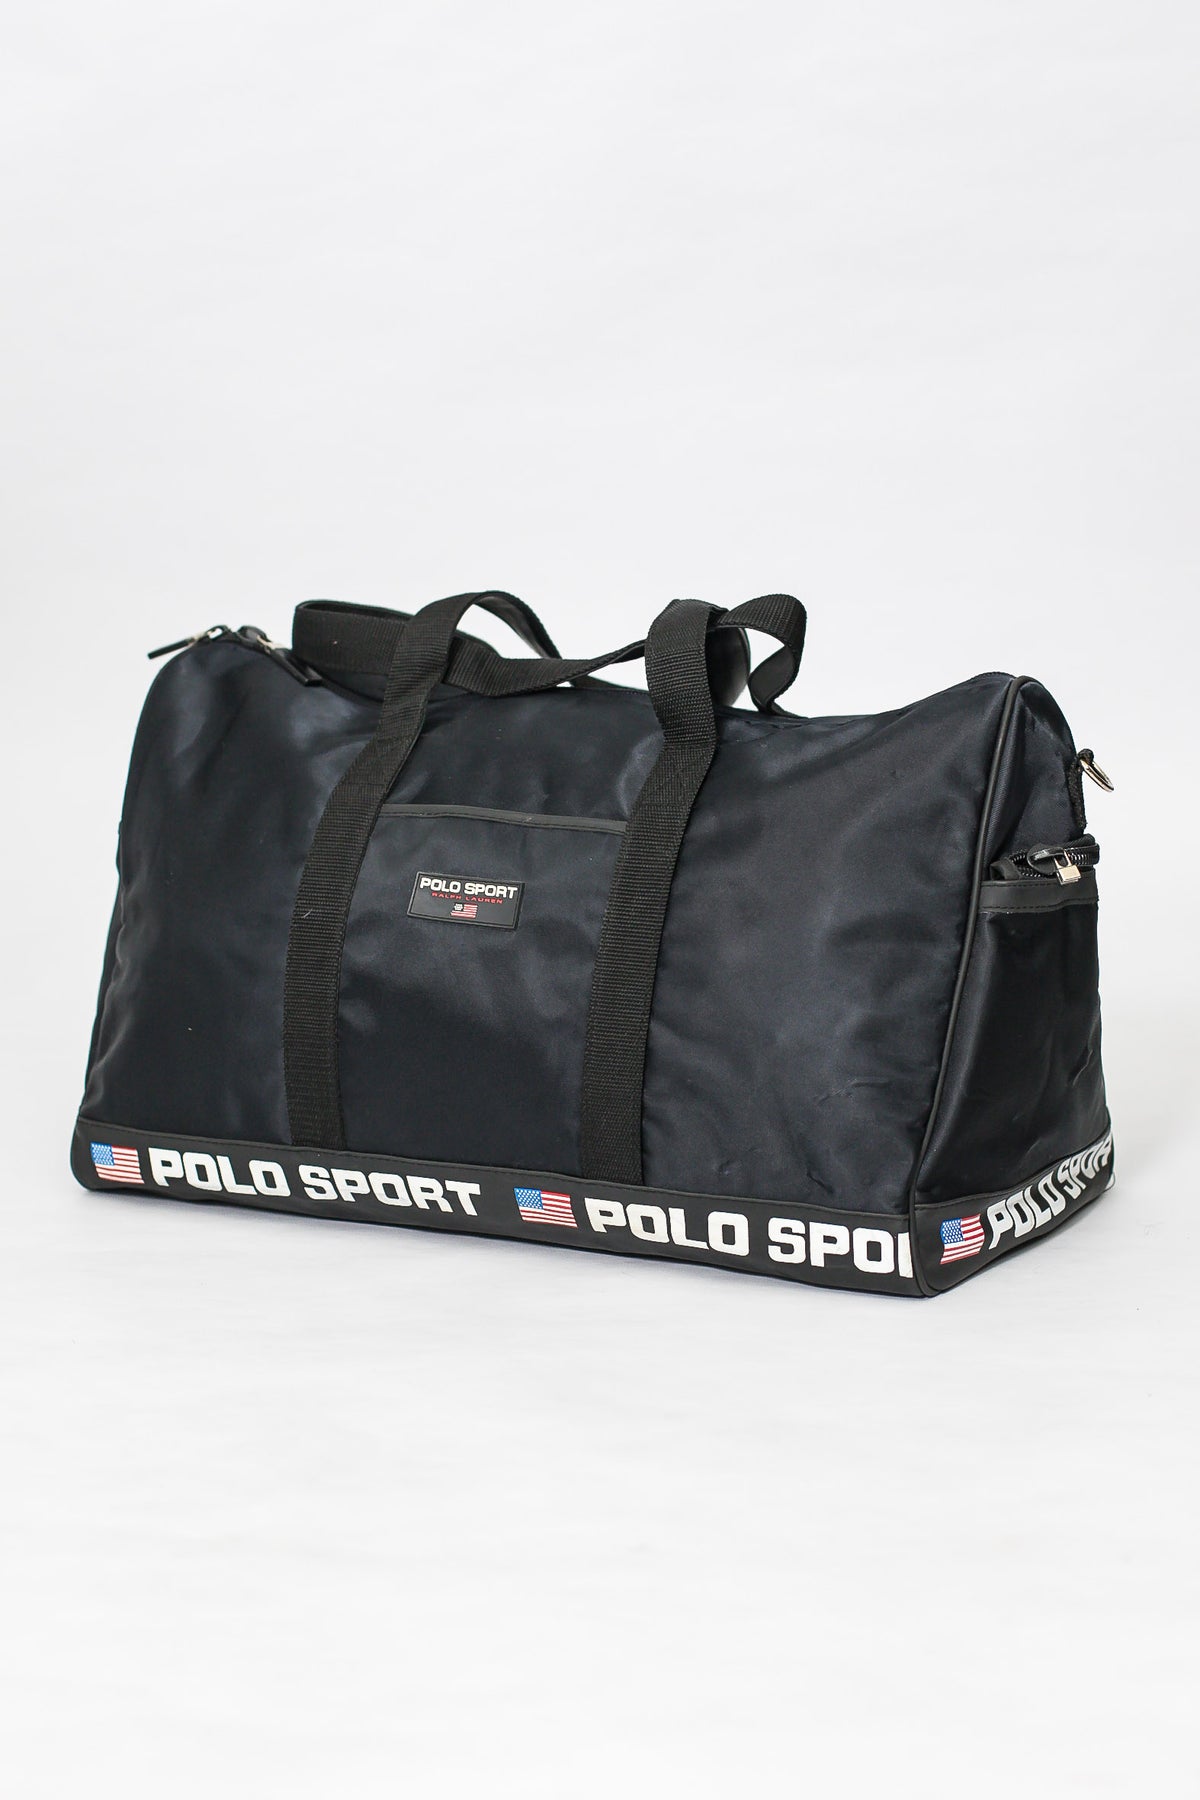 00s Ralph Lauren Polo Sport Duffle Bag